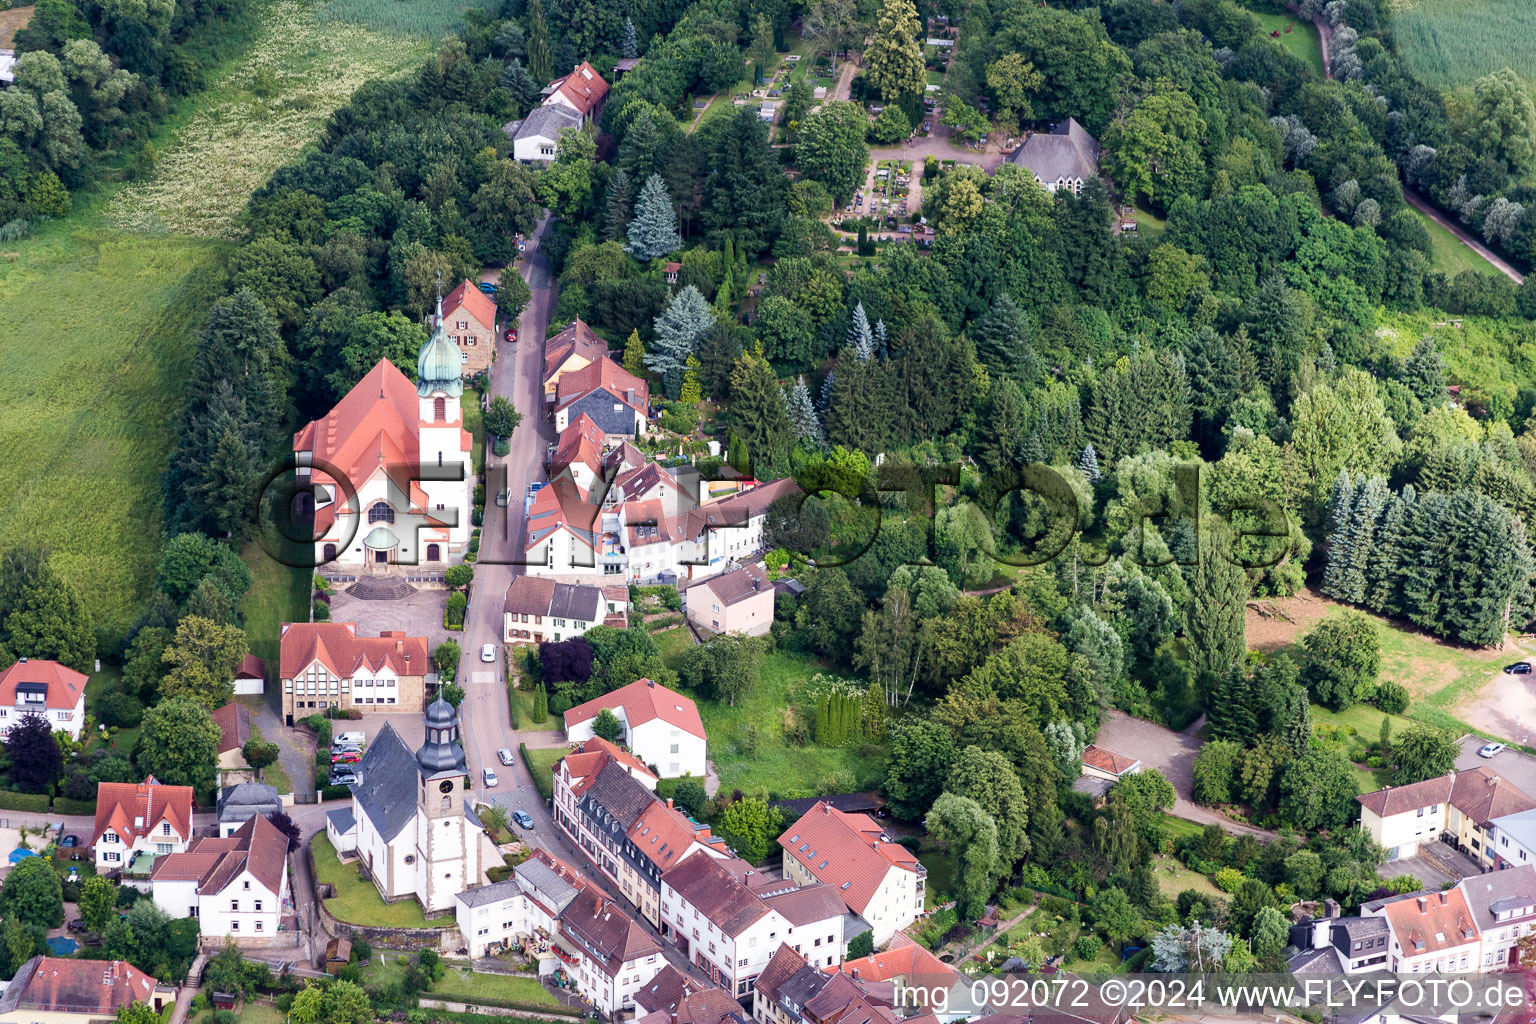 Oblique view of Church building of catholic Church Herz Jesu in Winnweiler in the state Rhineland-Palatinate, Germany